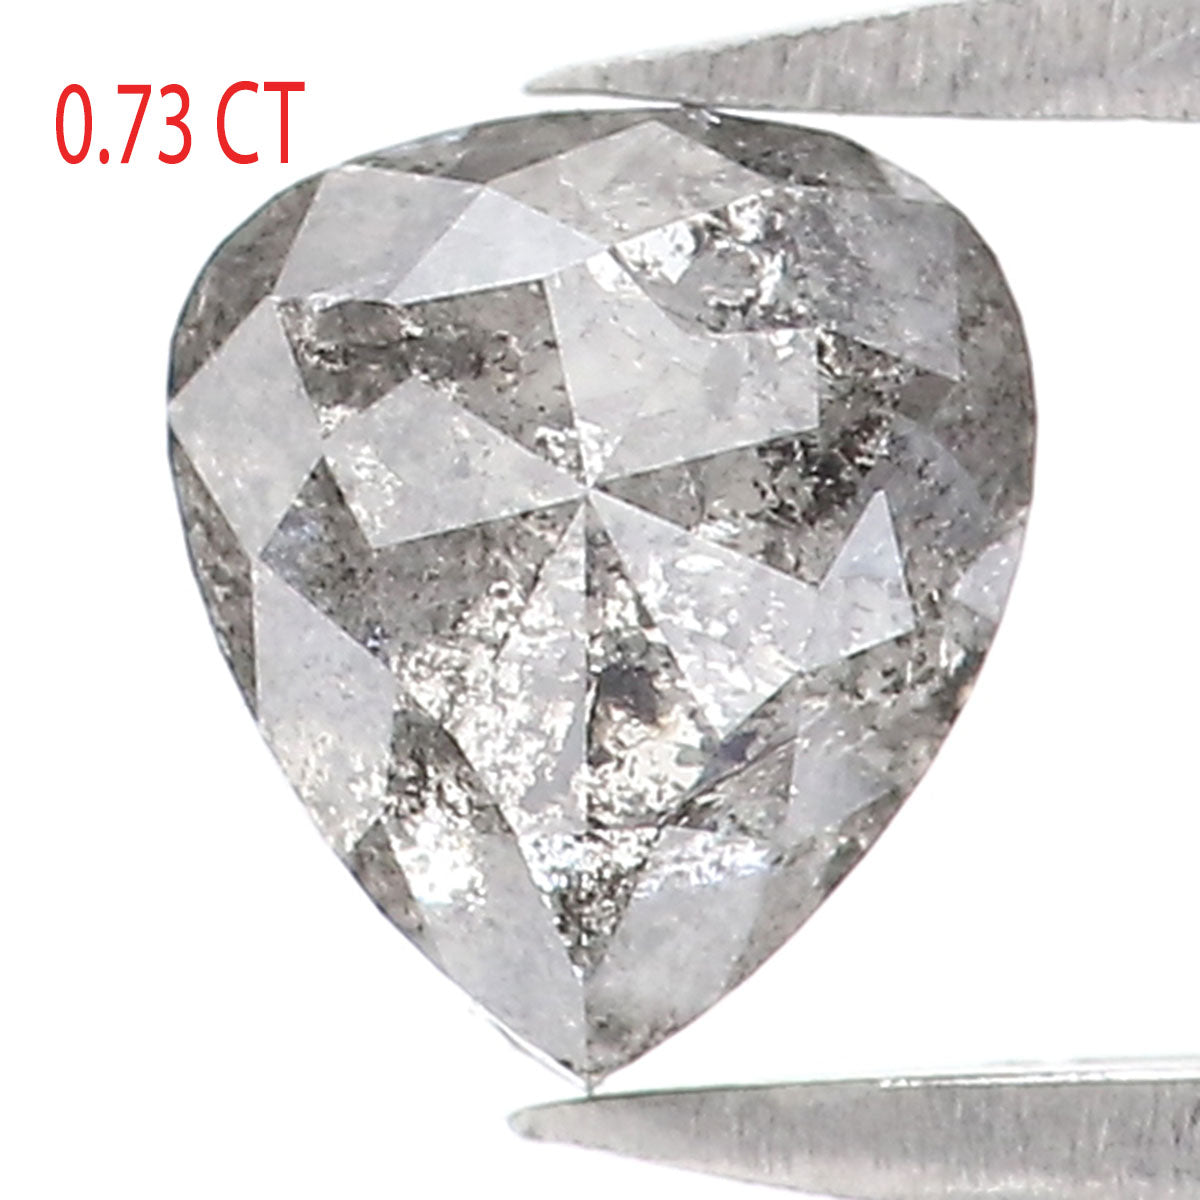 0.73 CT Natural Loose Heart Shape Diamond Salt And Pepper Heart Rose Cut Diamond 5.55 MM Black Grey Color Heart Rose Cut Diamond QL2469